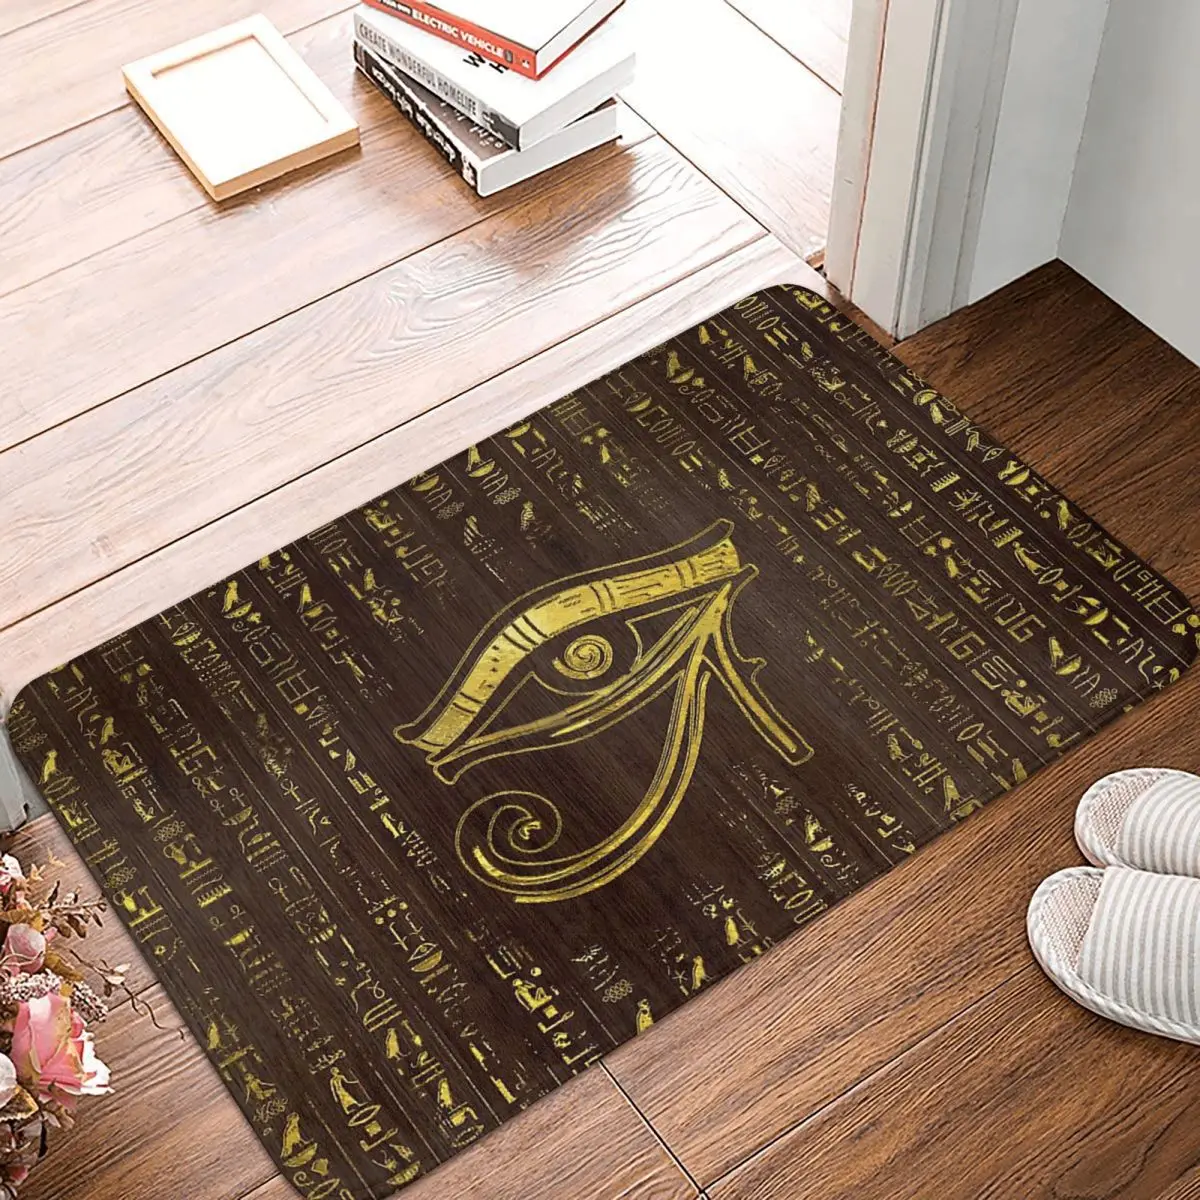 

Ancient Egypt Egyptian Bedroom Mat Eye Of Horus And Hieroglyphics On Wood Doormat Flannel Carpet Entrance Door Rug Home Decor